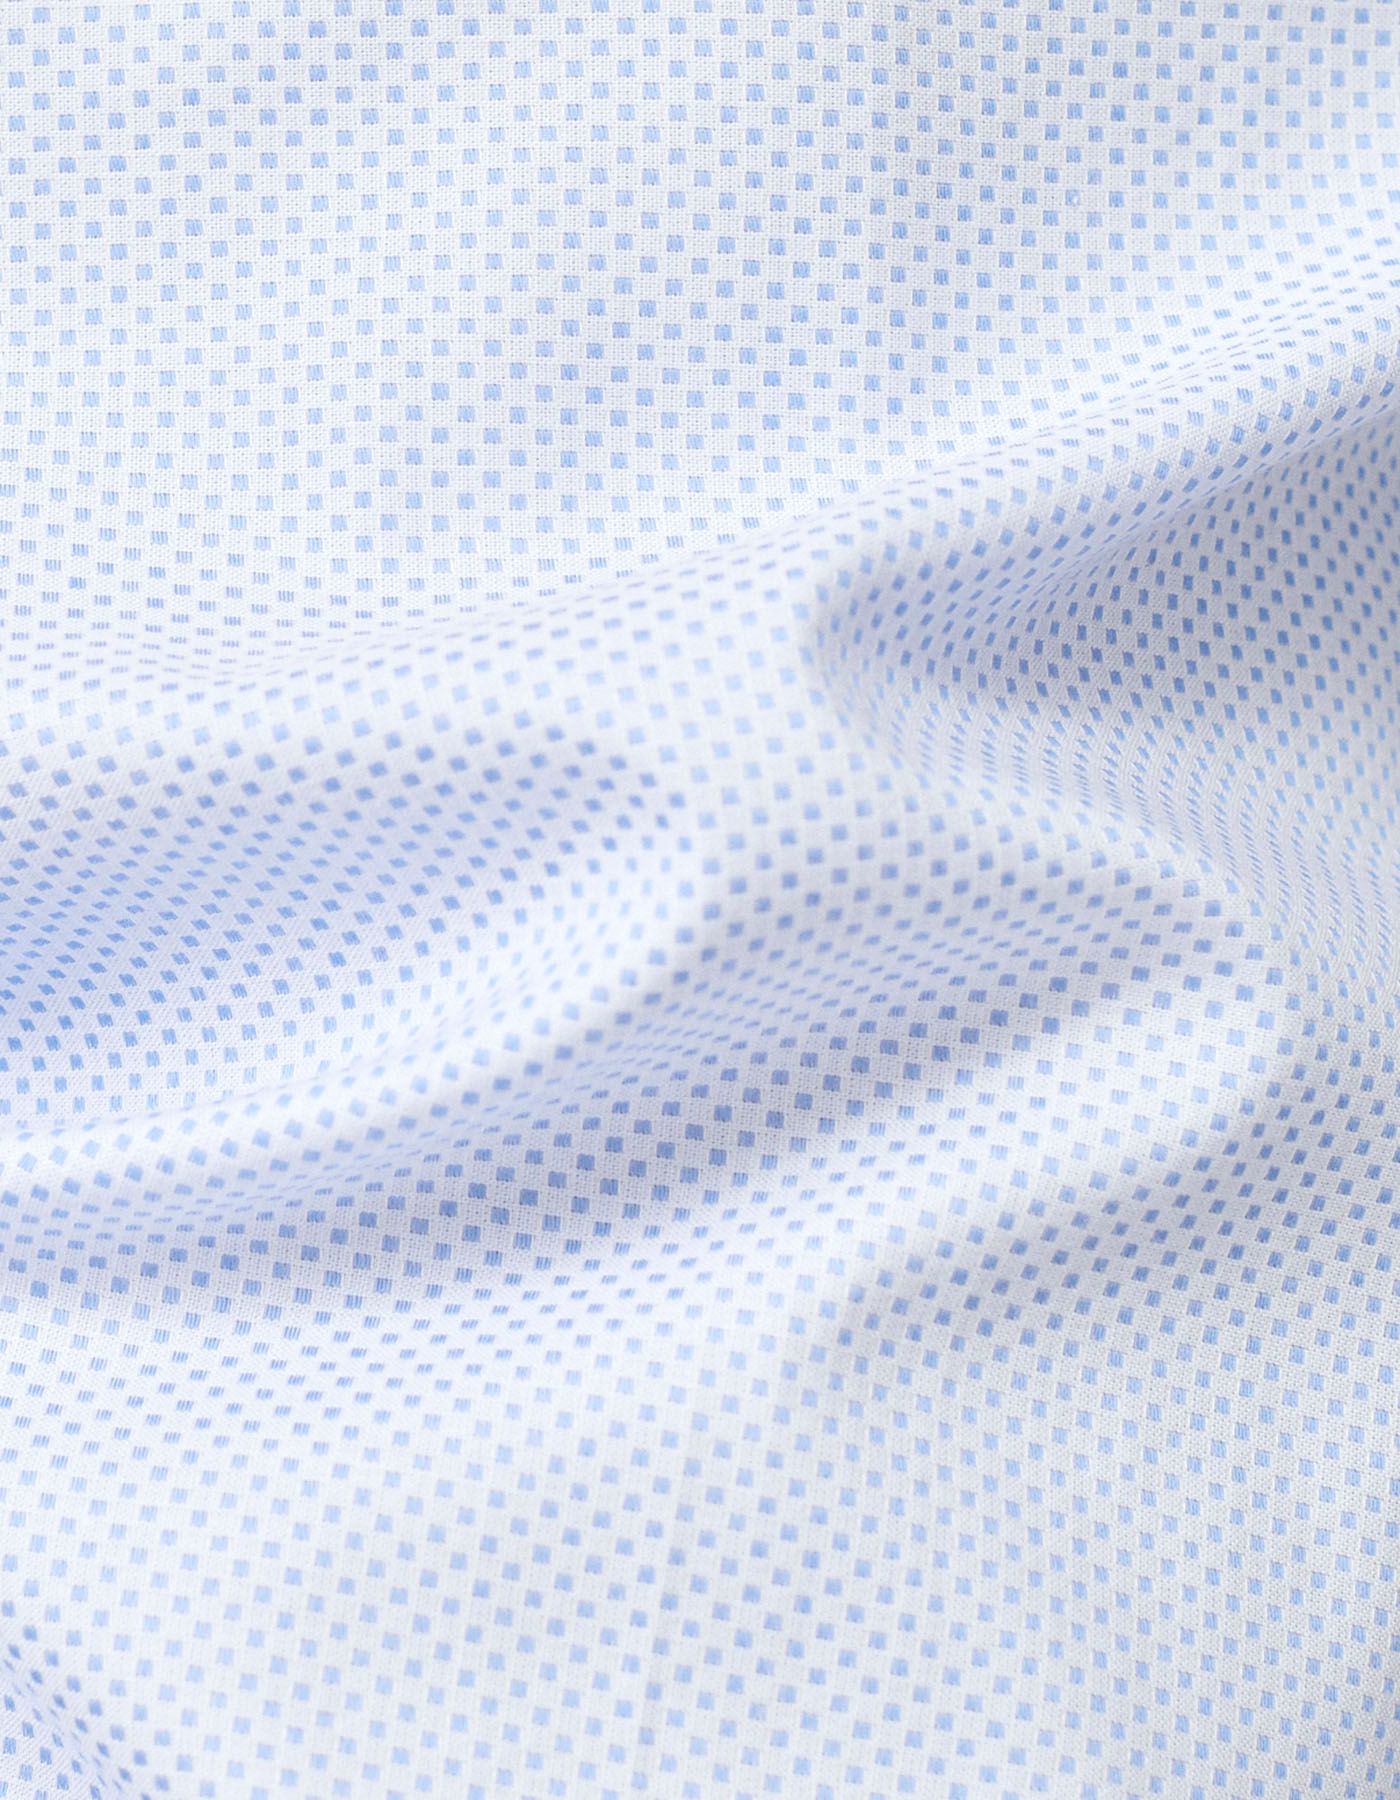 Blue Micro Pattern Active Fabric Shirt